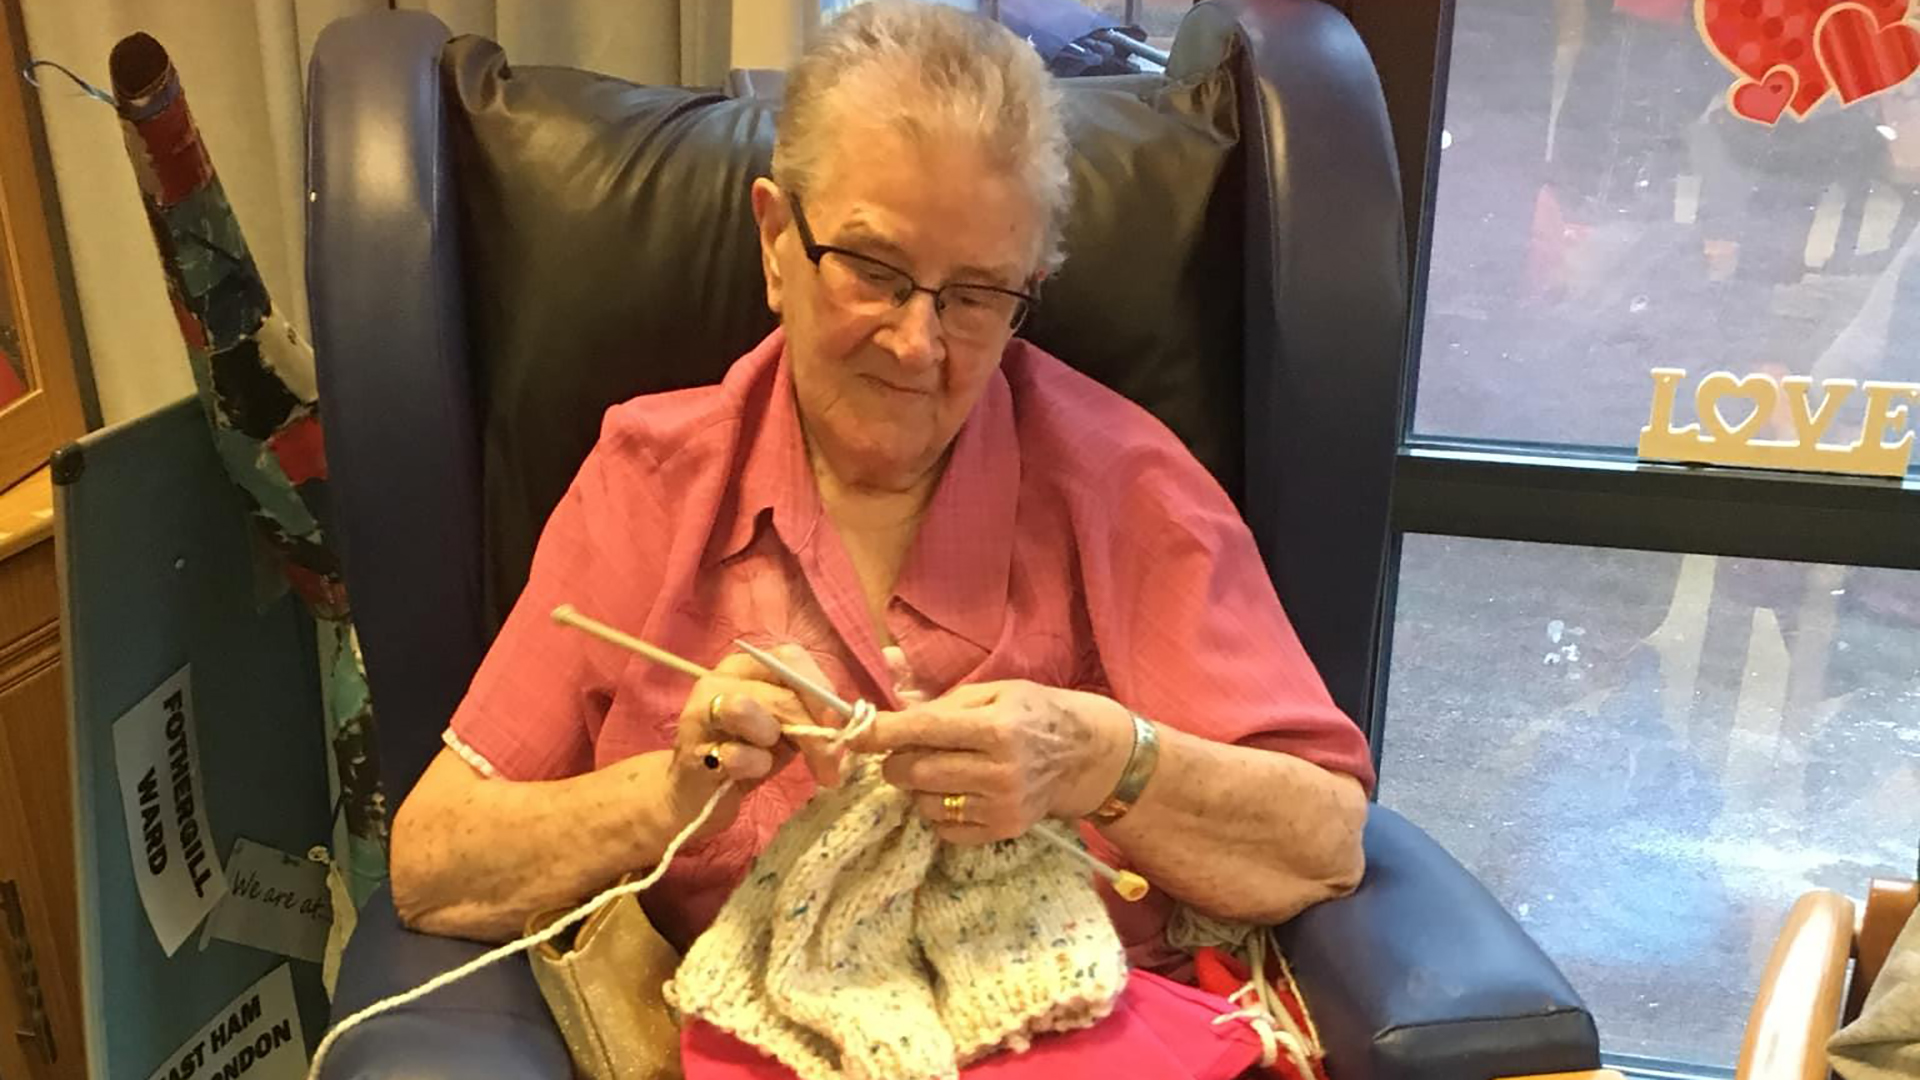 Emma knitting